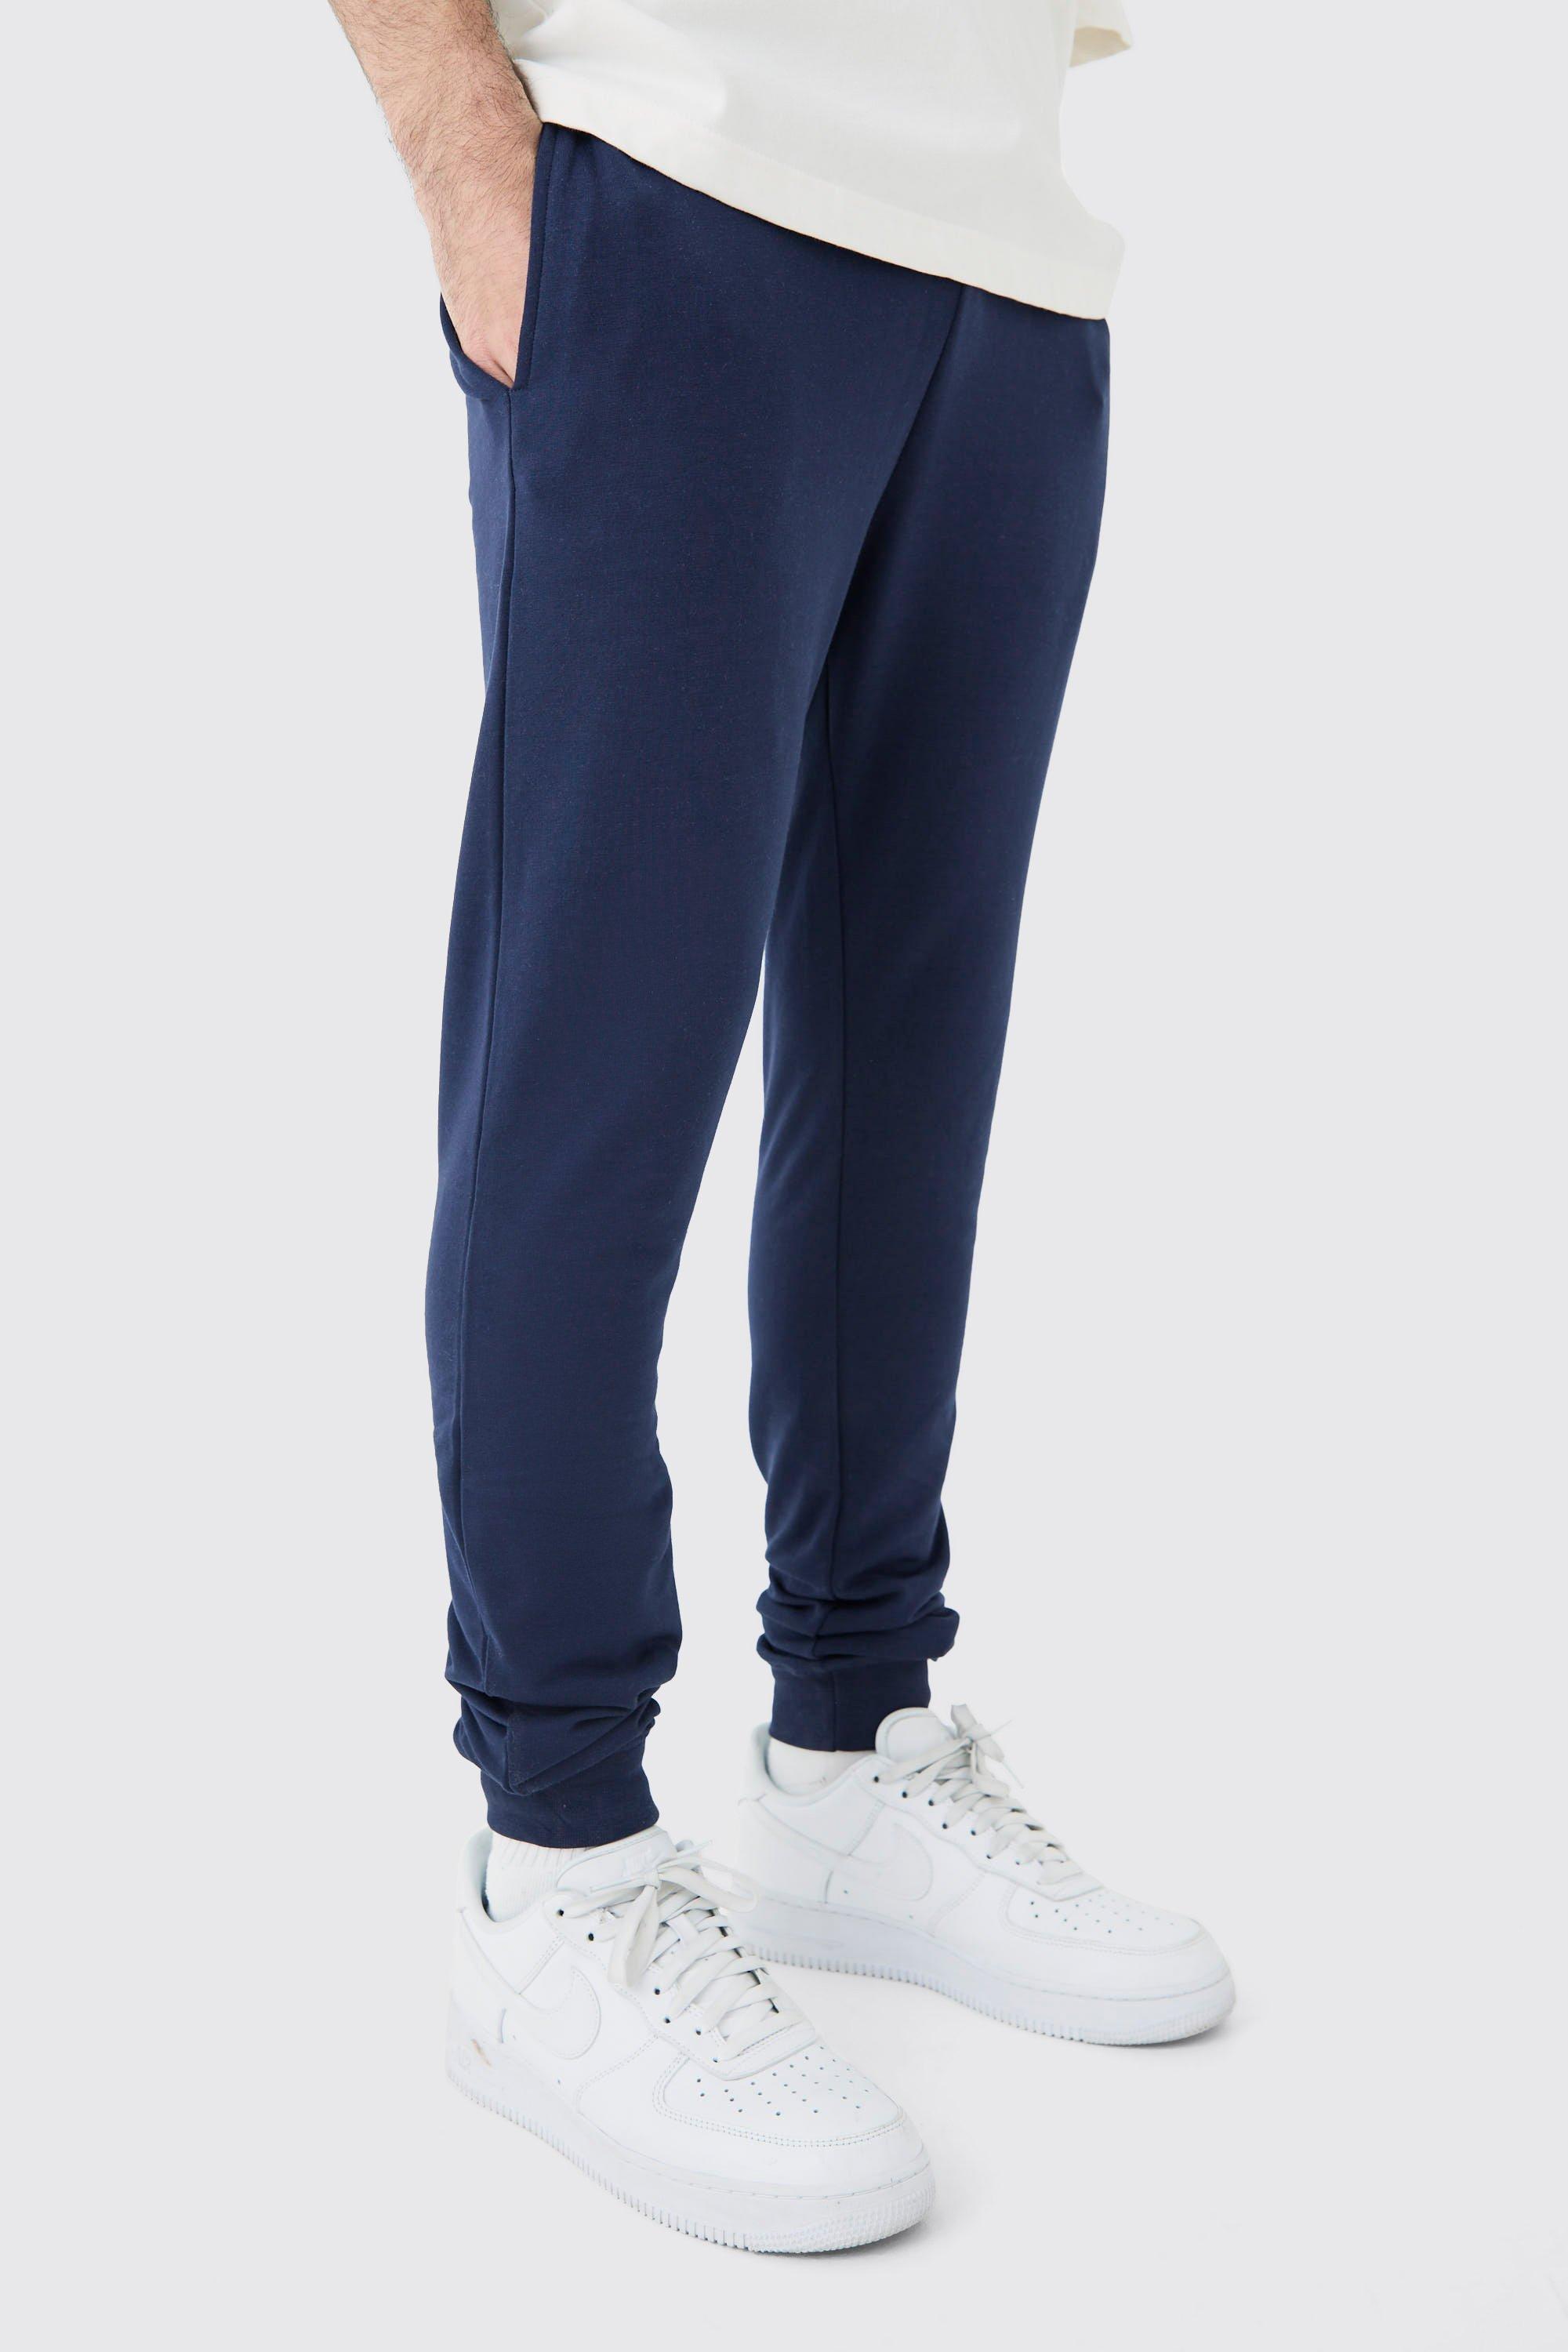 Image of Pantaloni tuta Super Skinny Fit, Navy